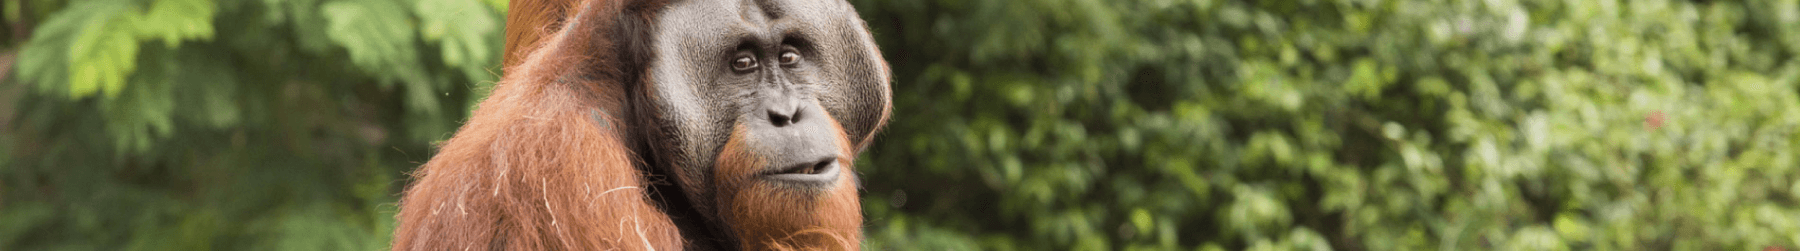 Orangutan Insider Tour